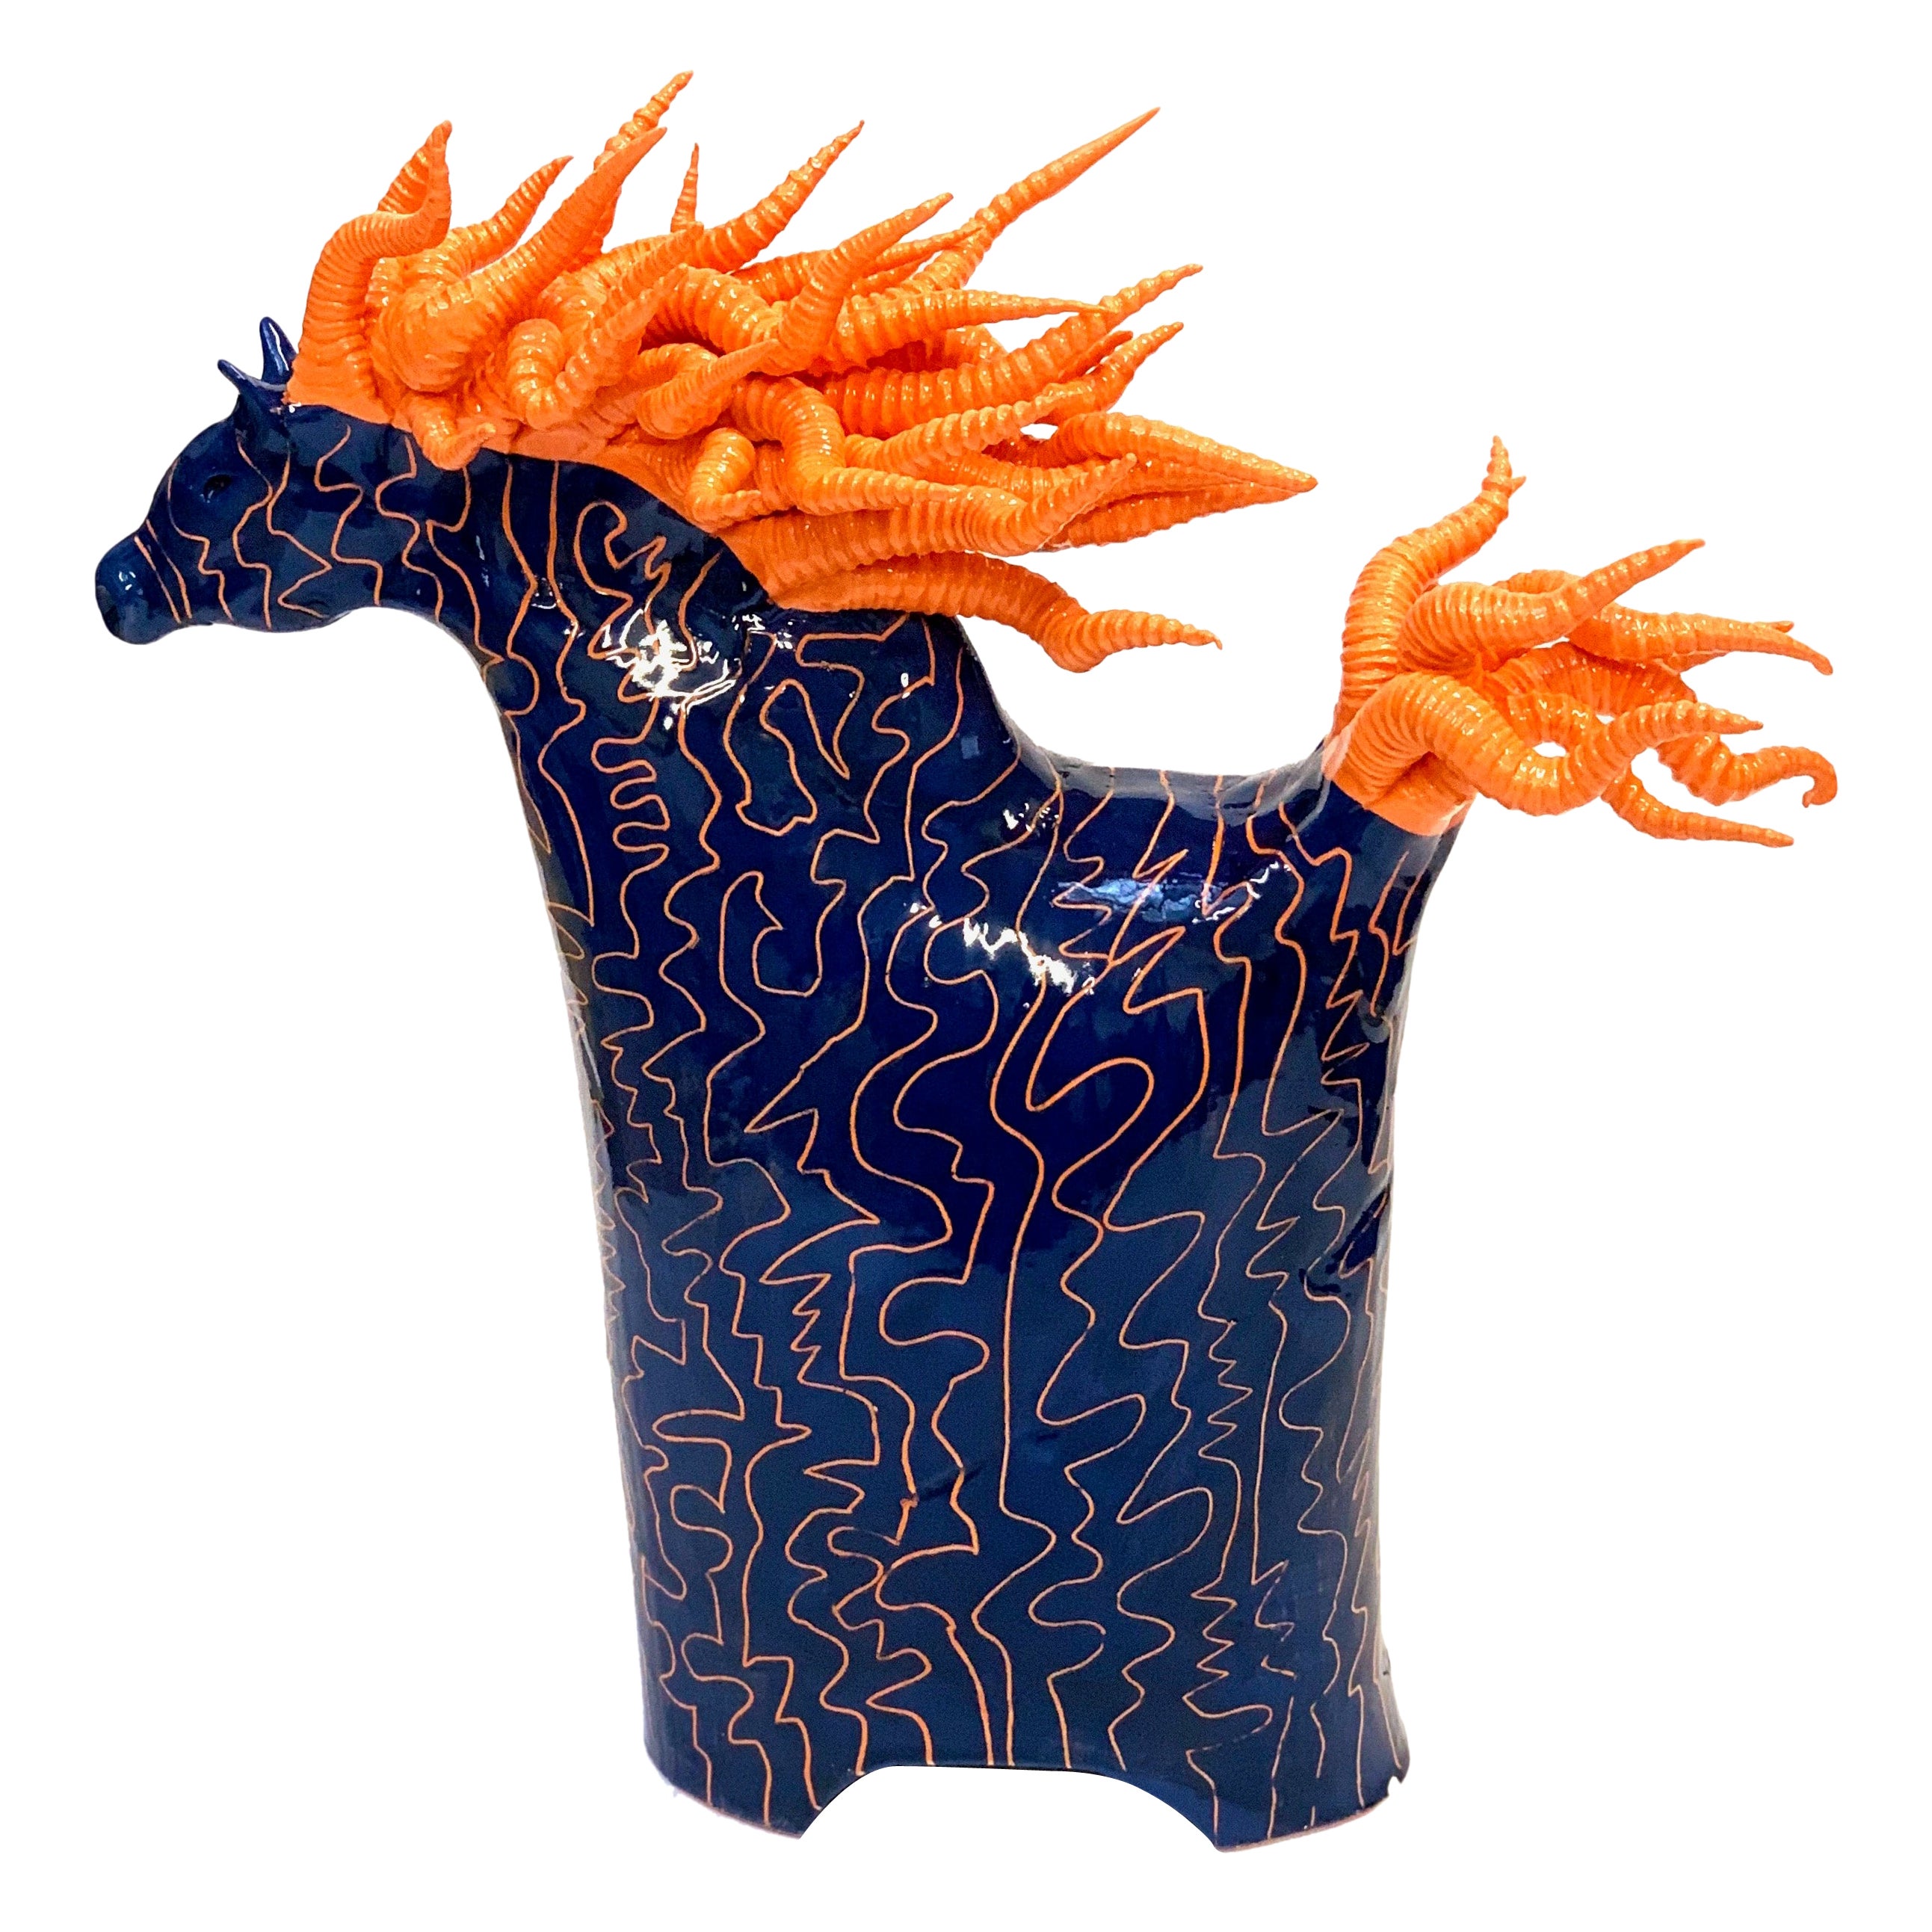 Futurist Horses, Decorative Centerpiece Handmade Italy 2020, Hand-Crafted